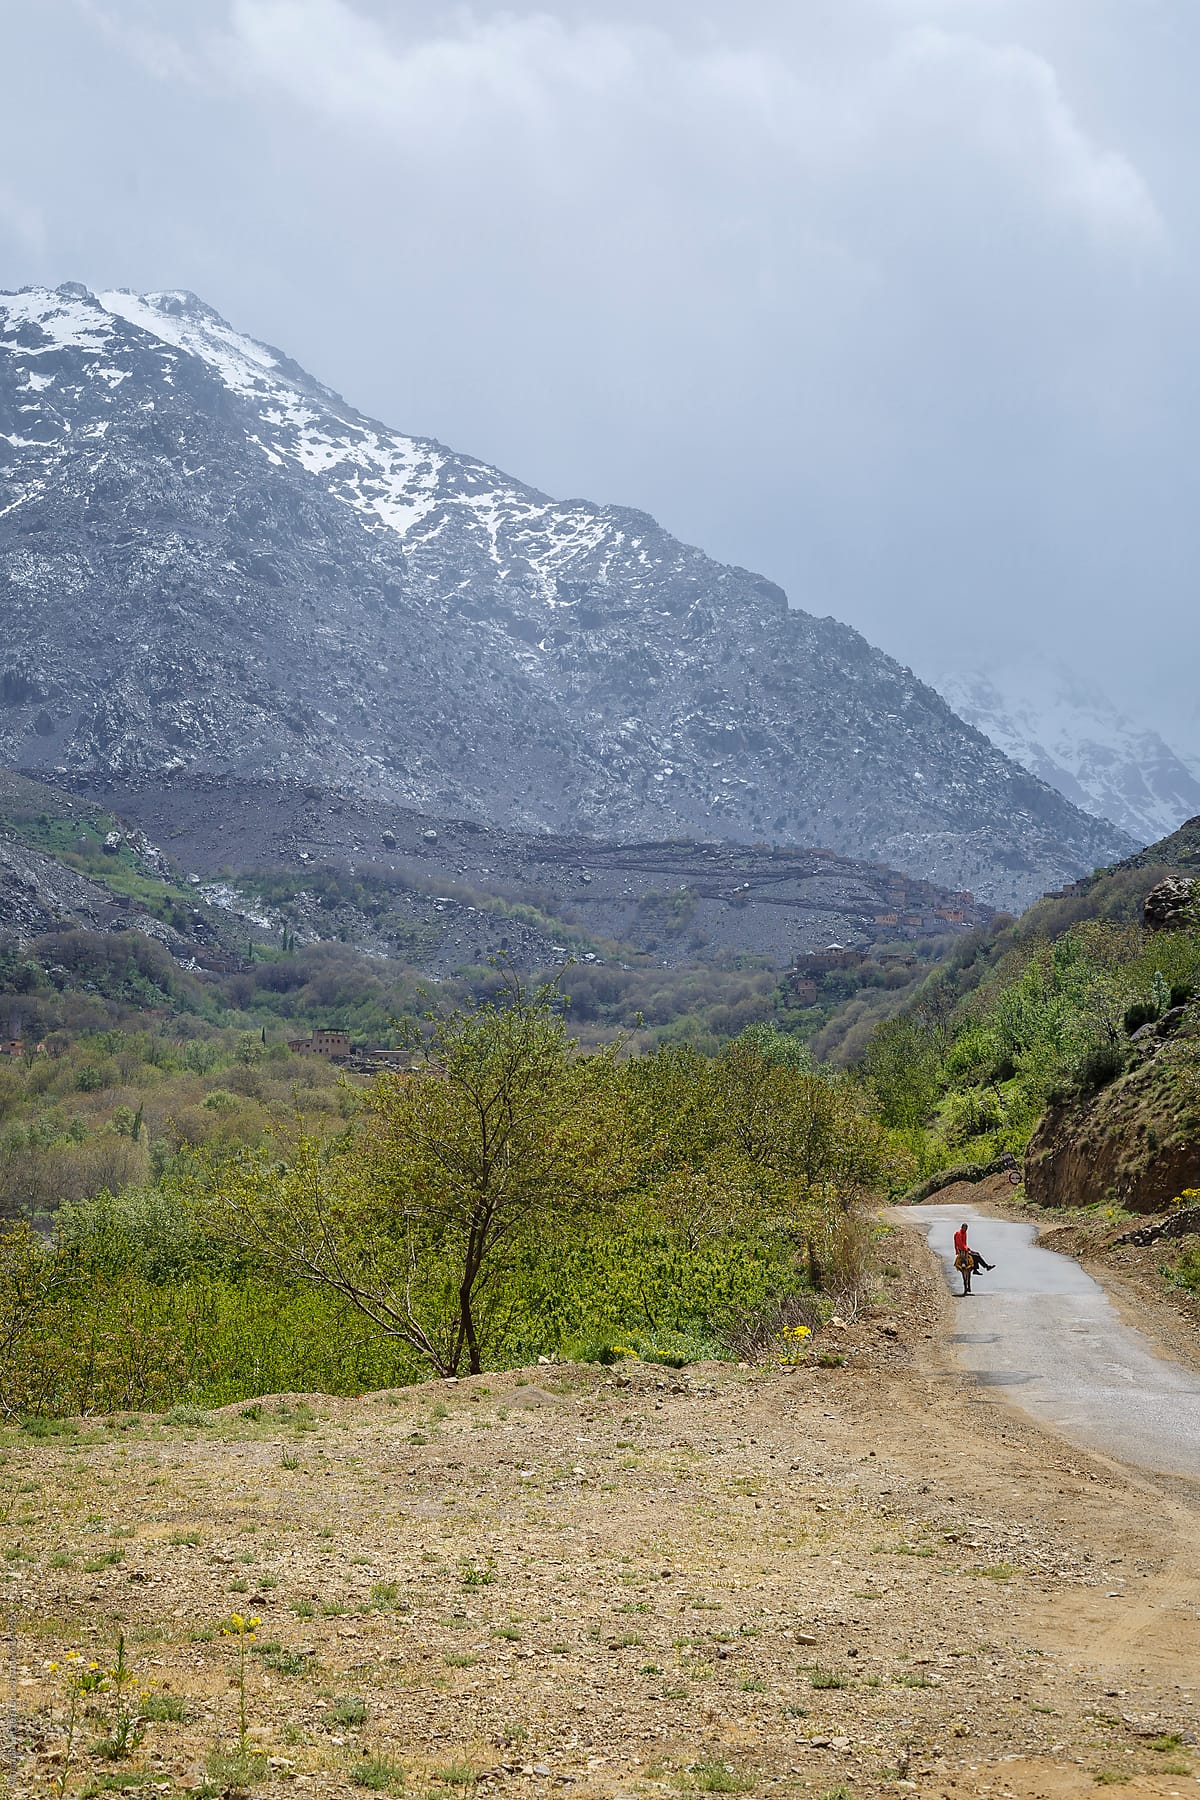 Man riding a donkey on a mountain path